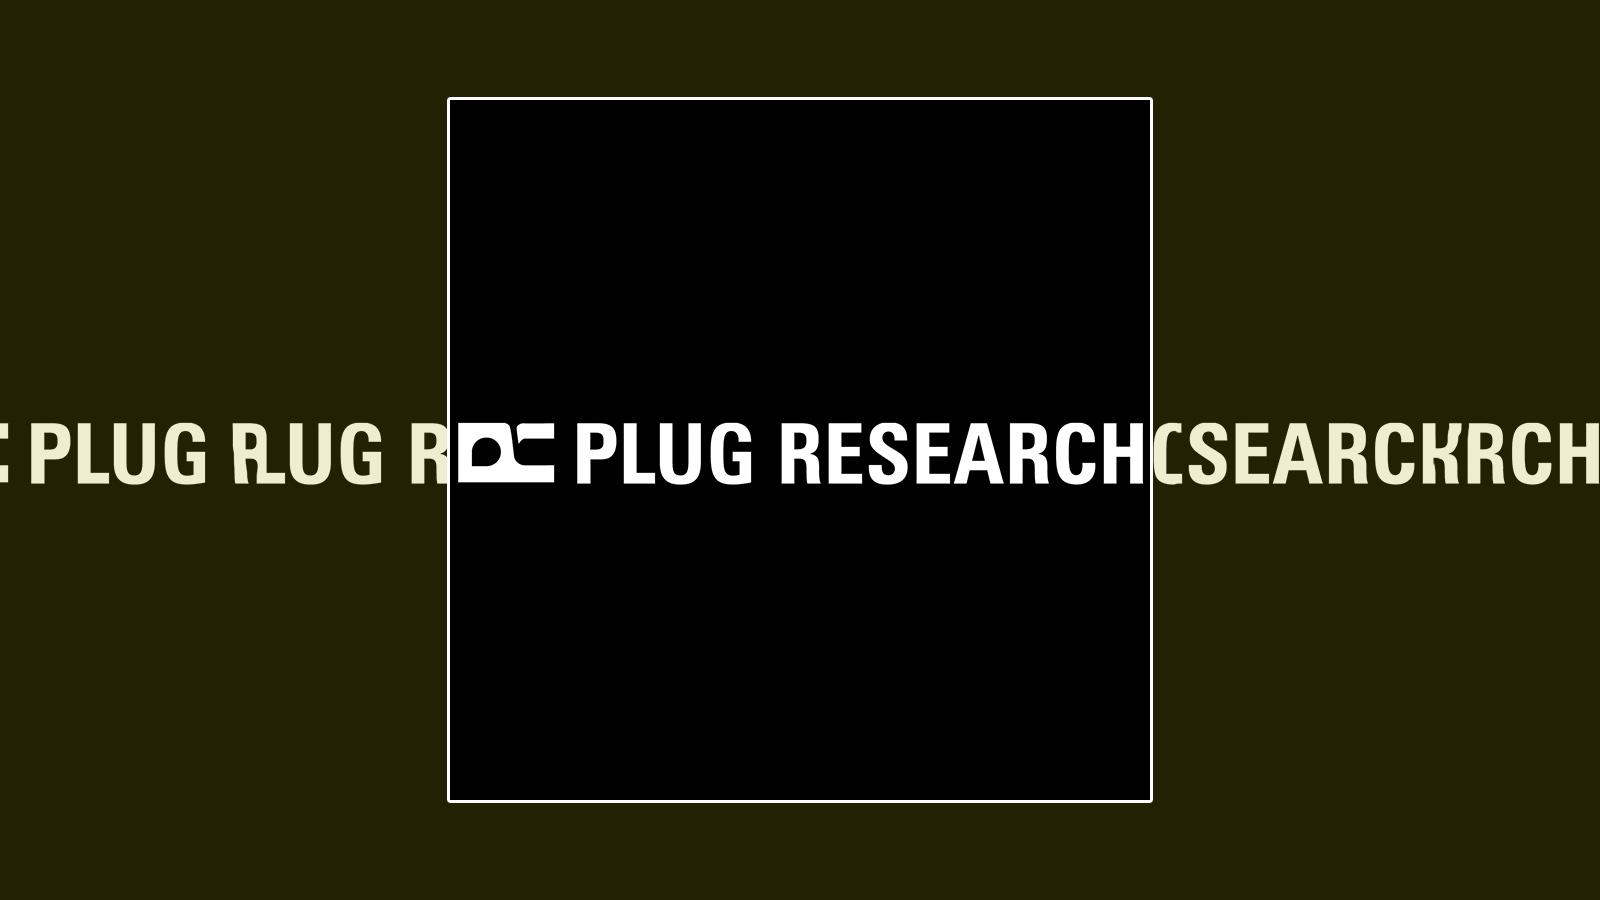 Plug Research lead